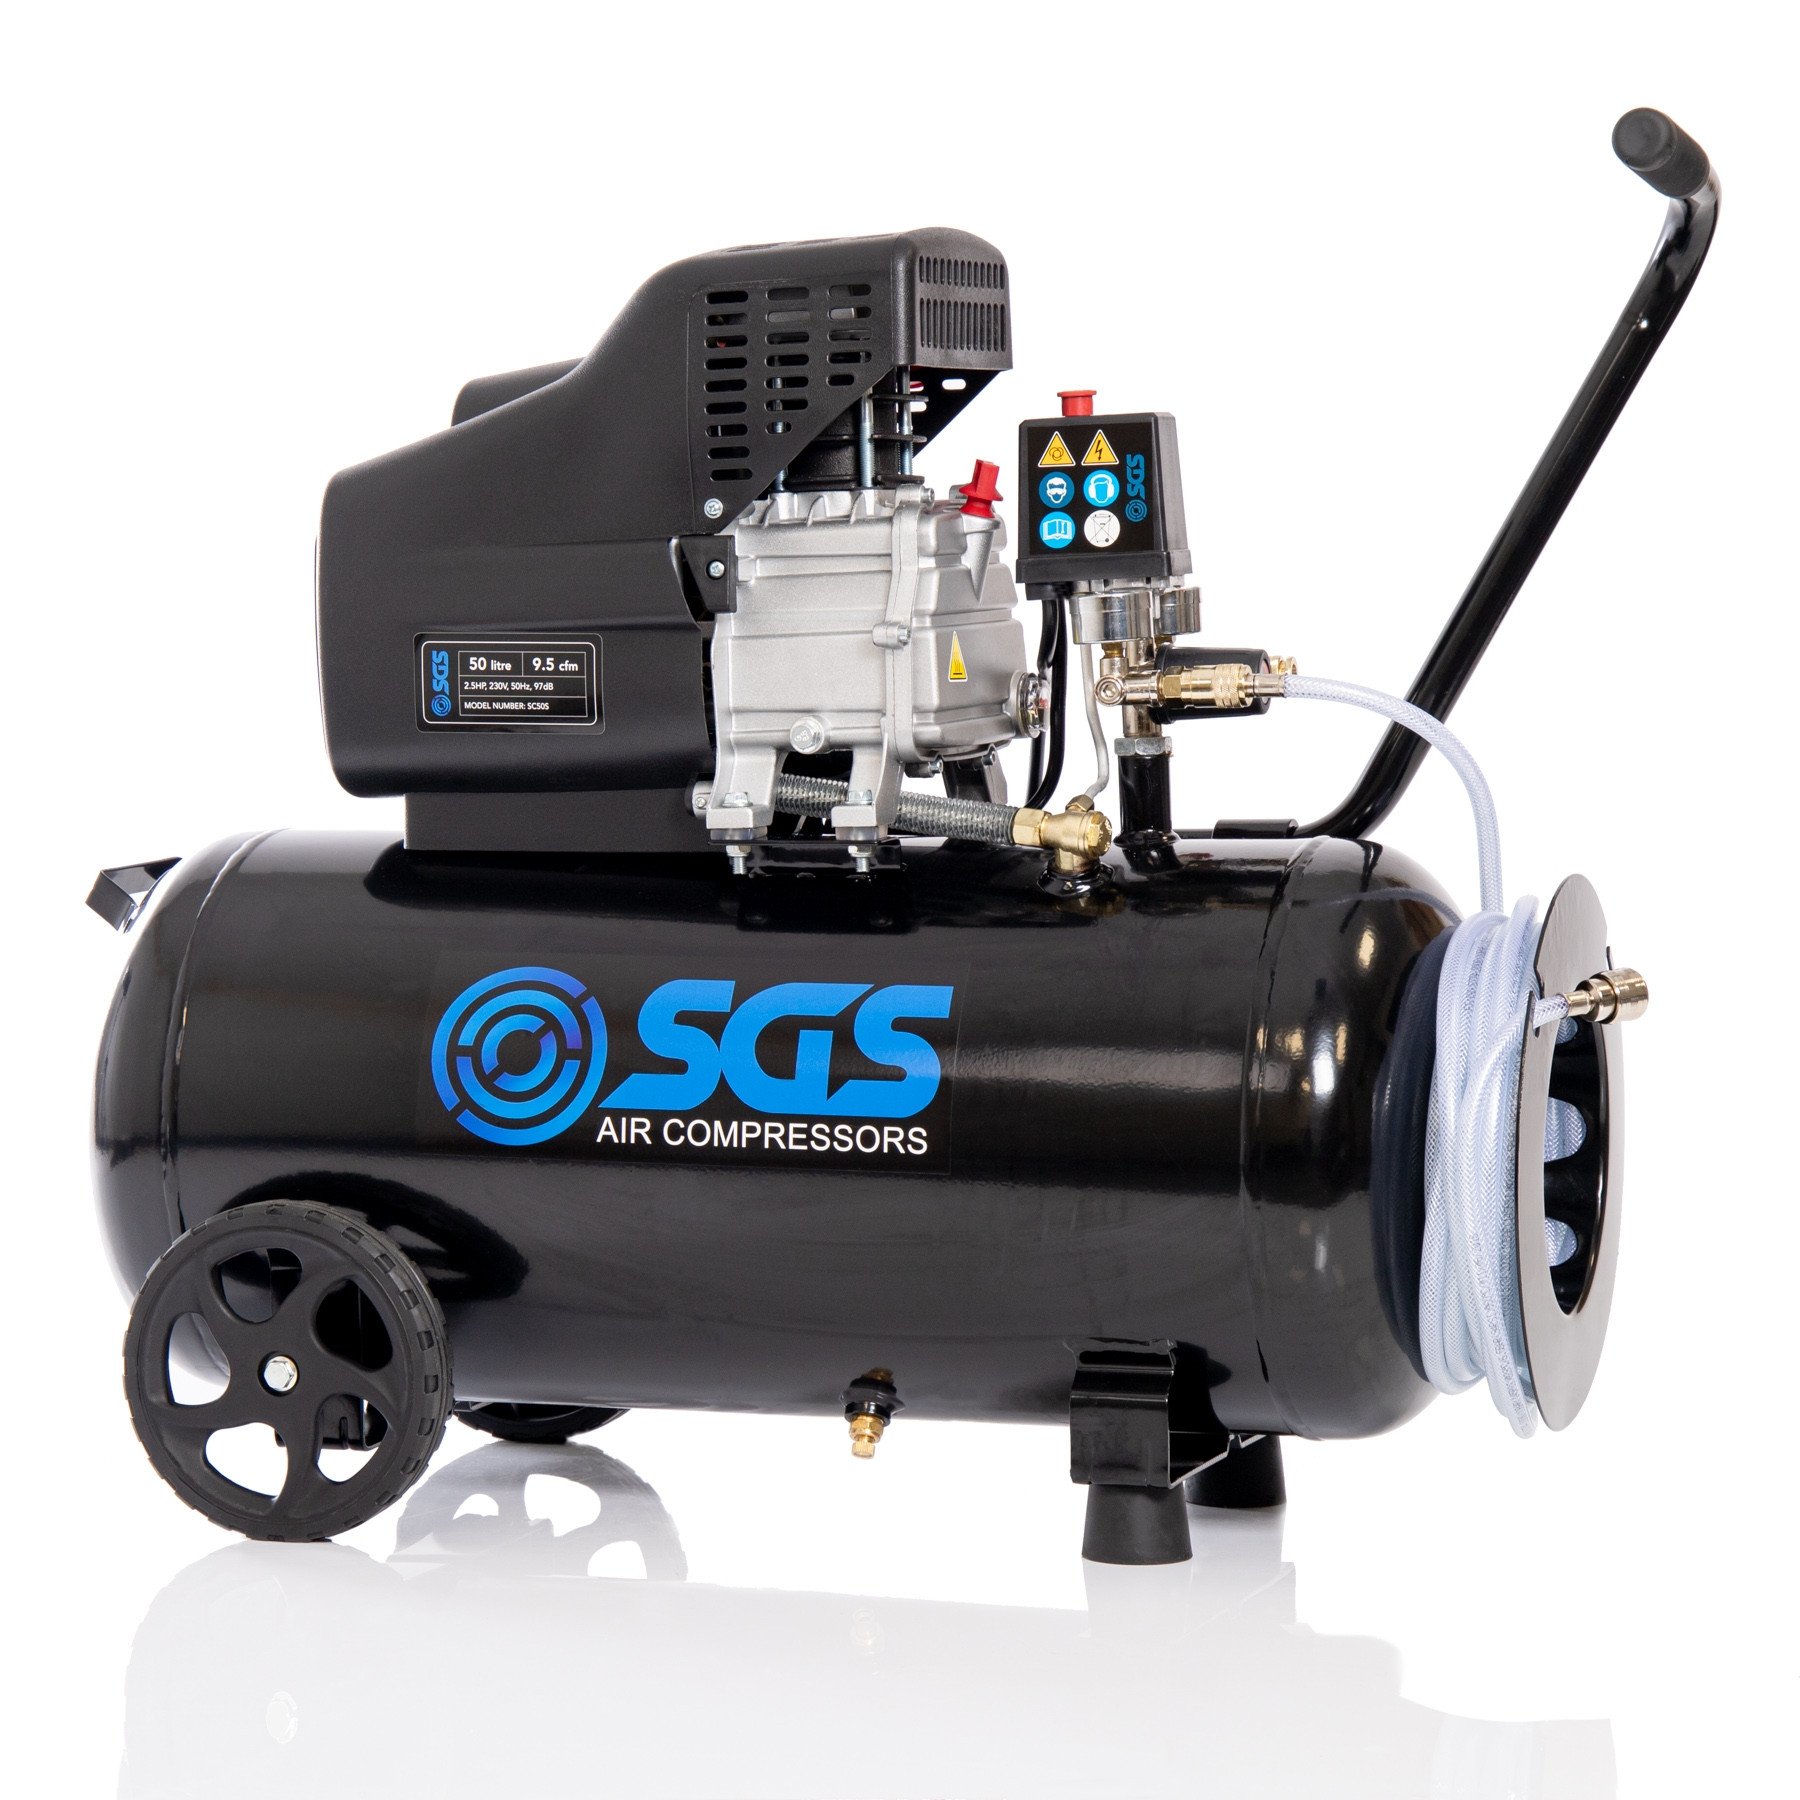 SGS 50升直接驱动空气压缩机与集成软管卷盘2.5 - 9.5 cfm惠普50 l